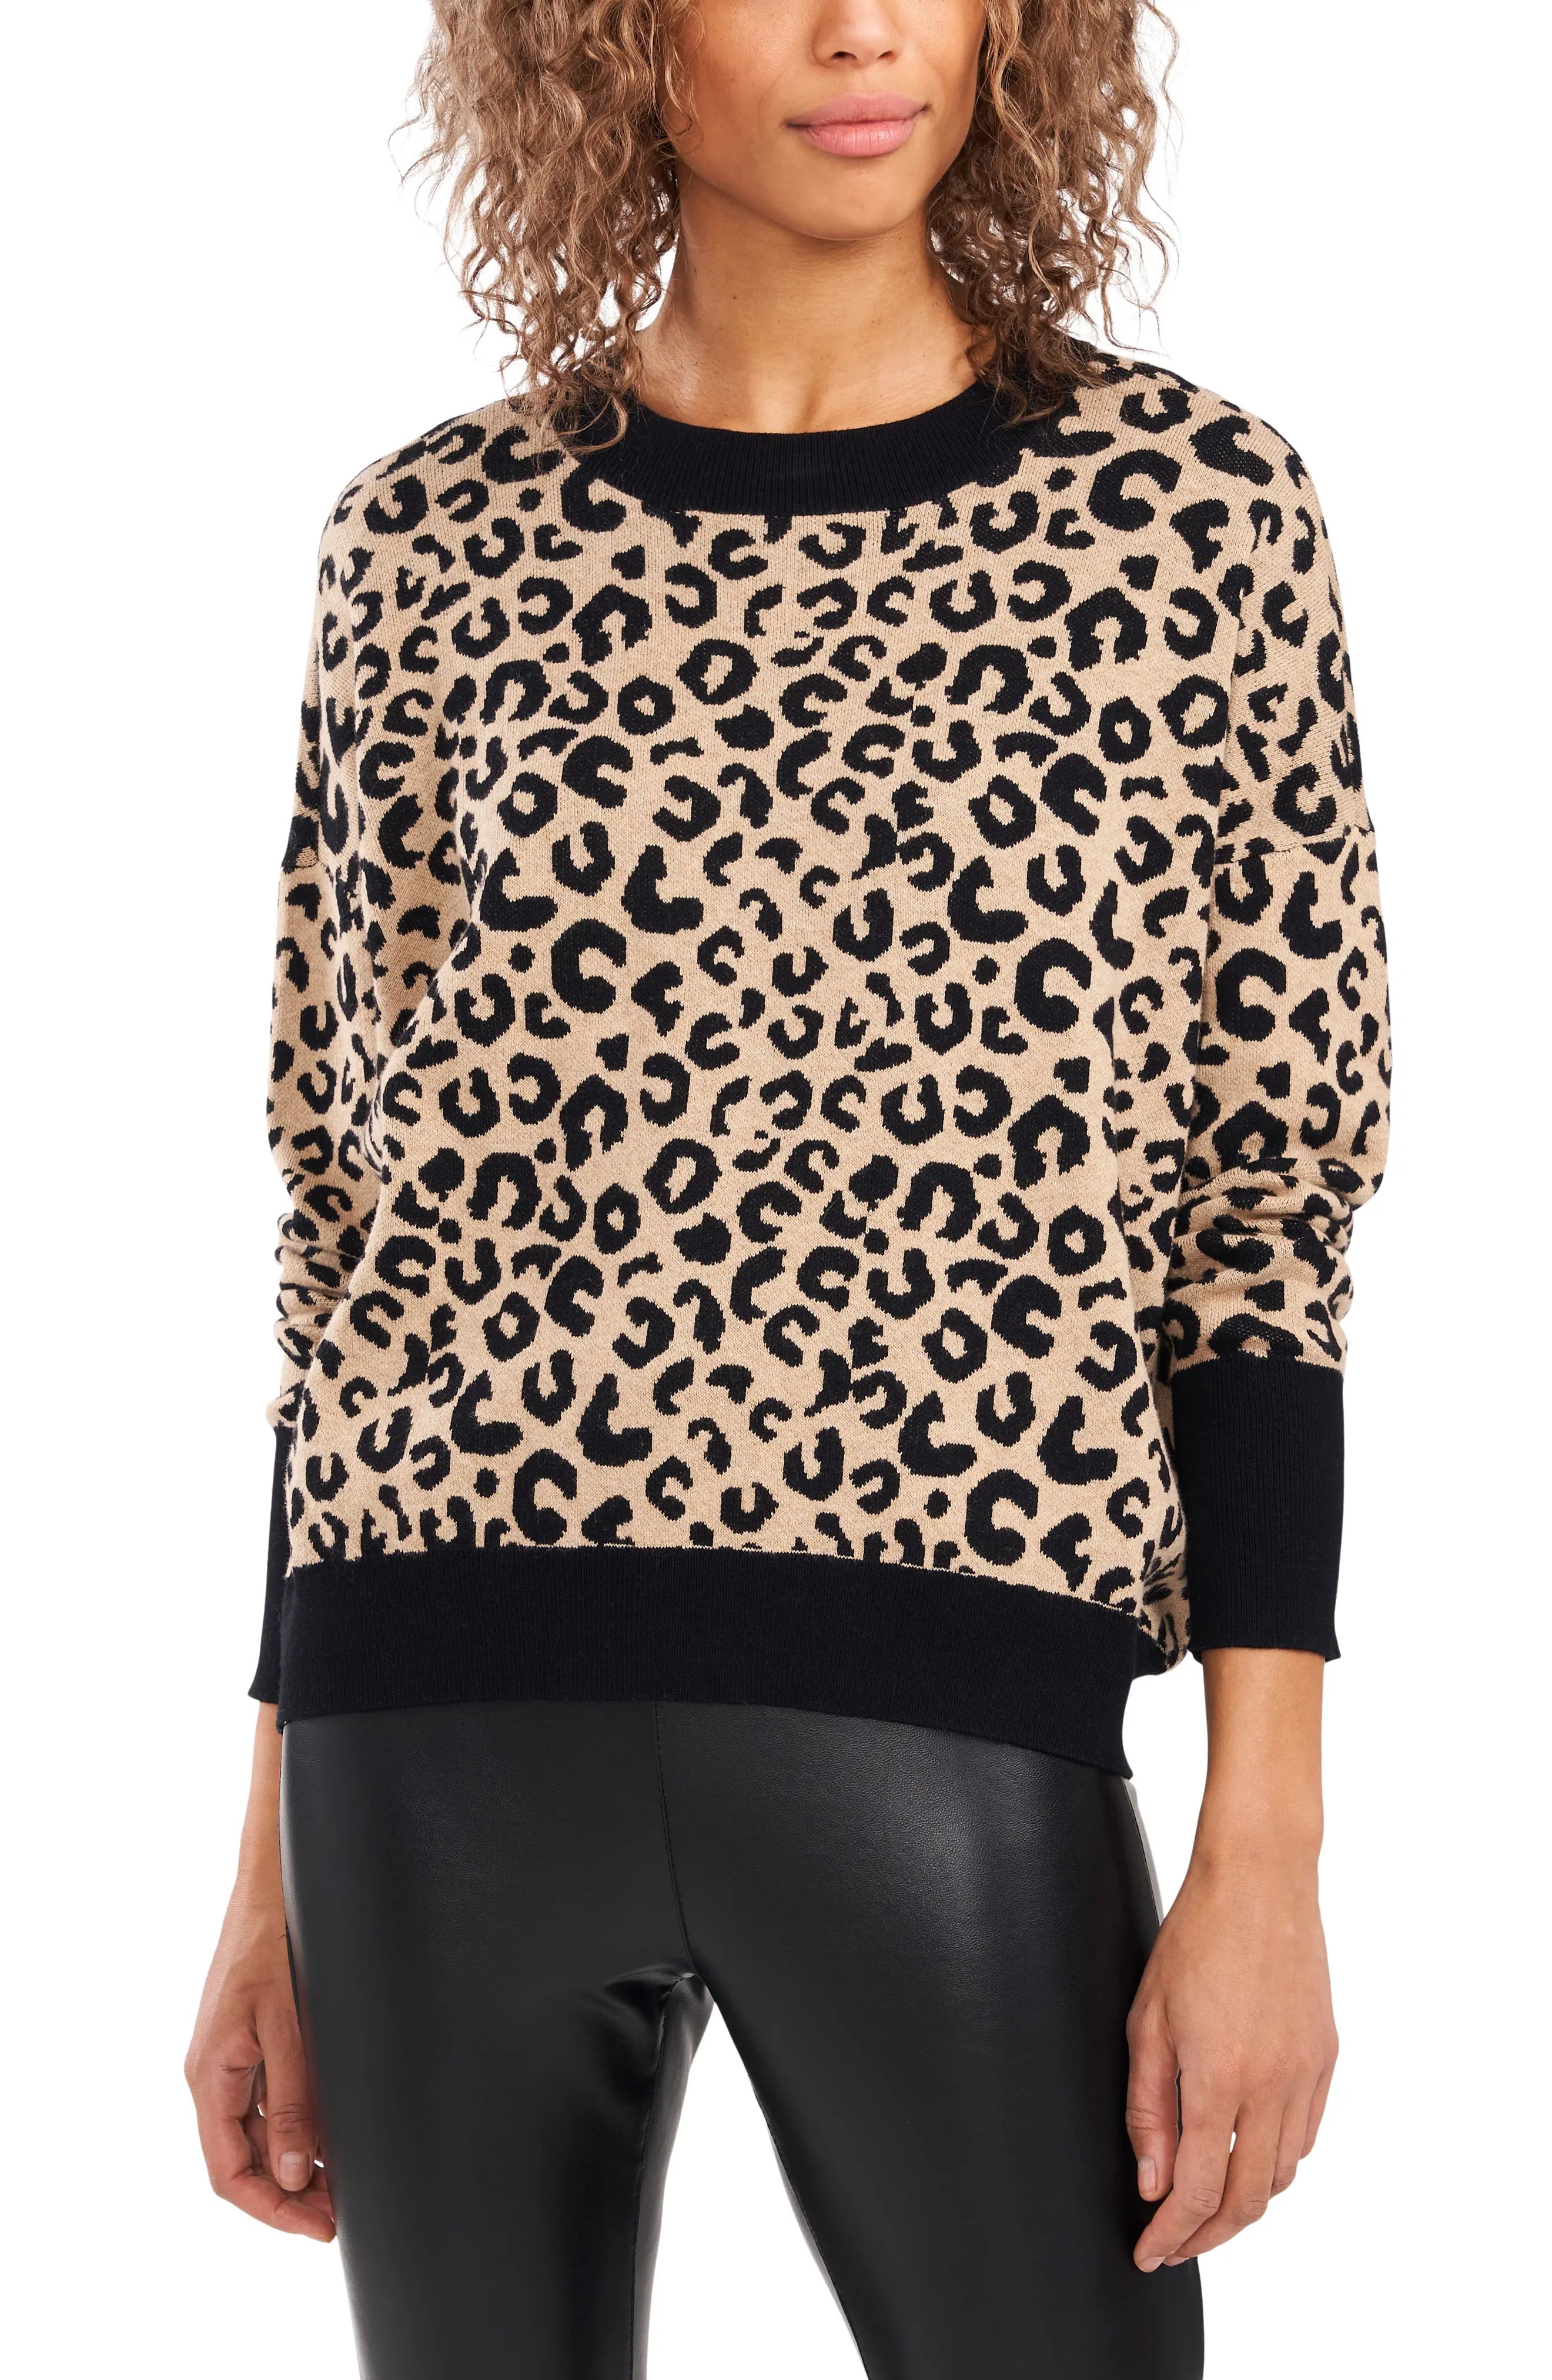 Vince Camuto Leopard Jacquard Crewneck Sweater in Rich Black at Nordstrom, Size Large | Nordstrom